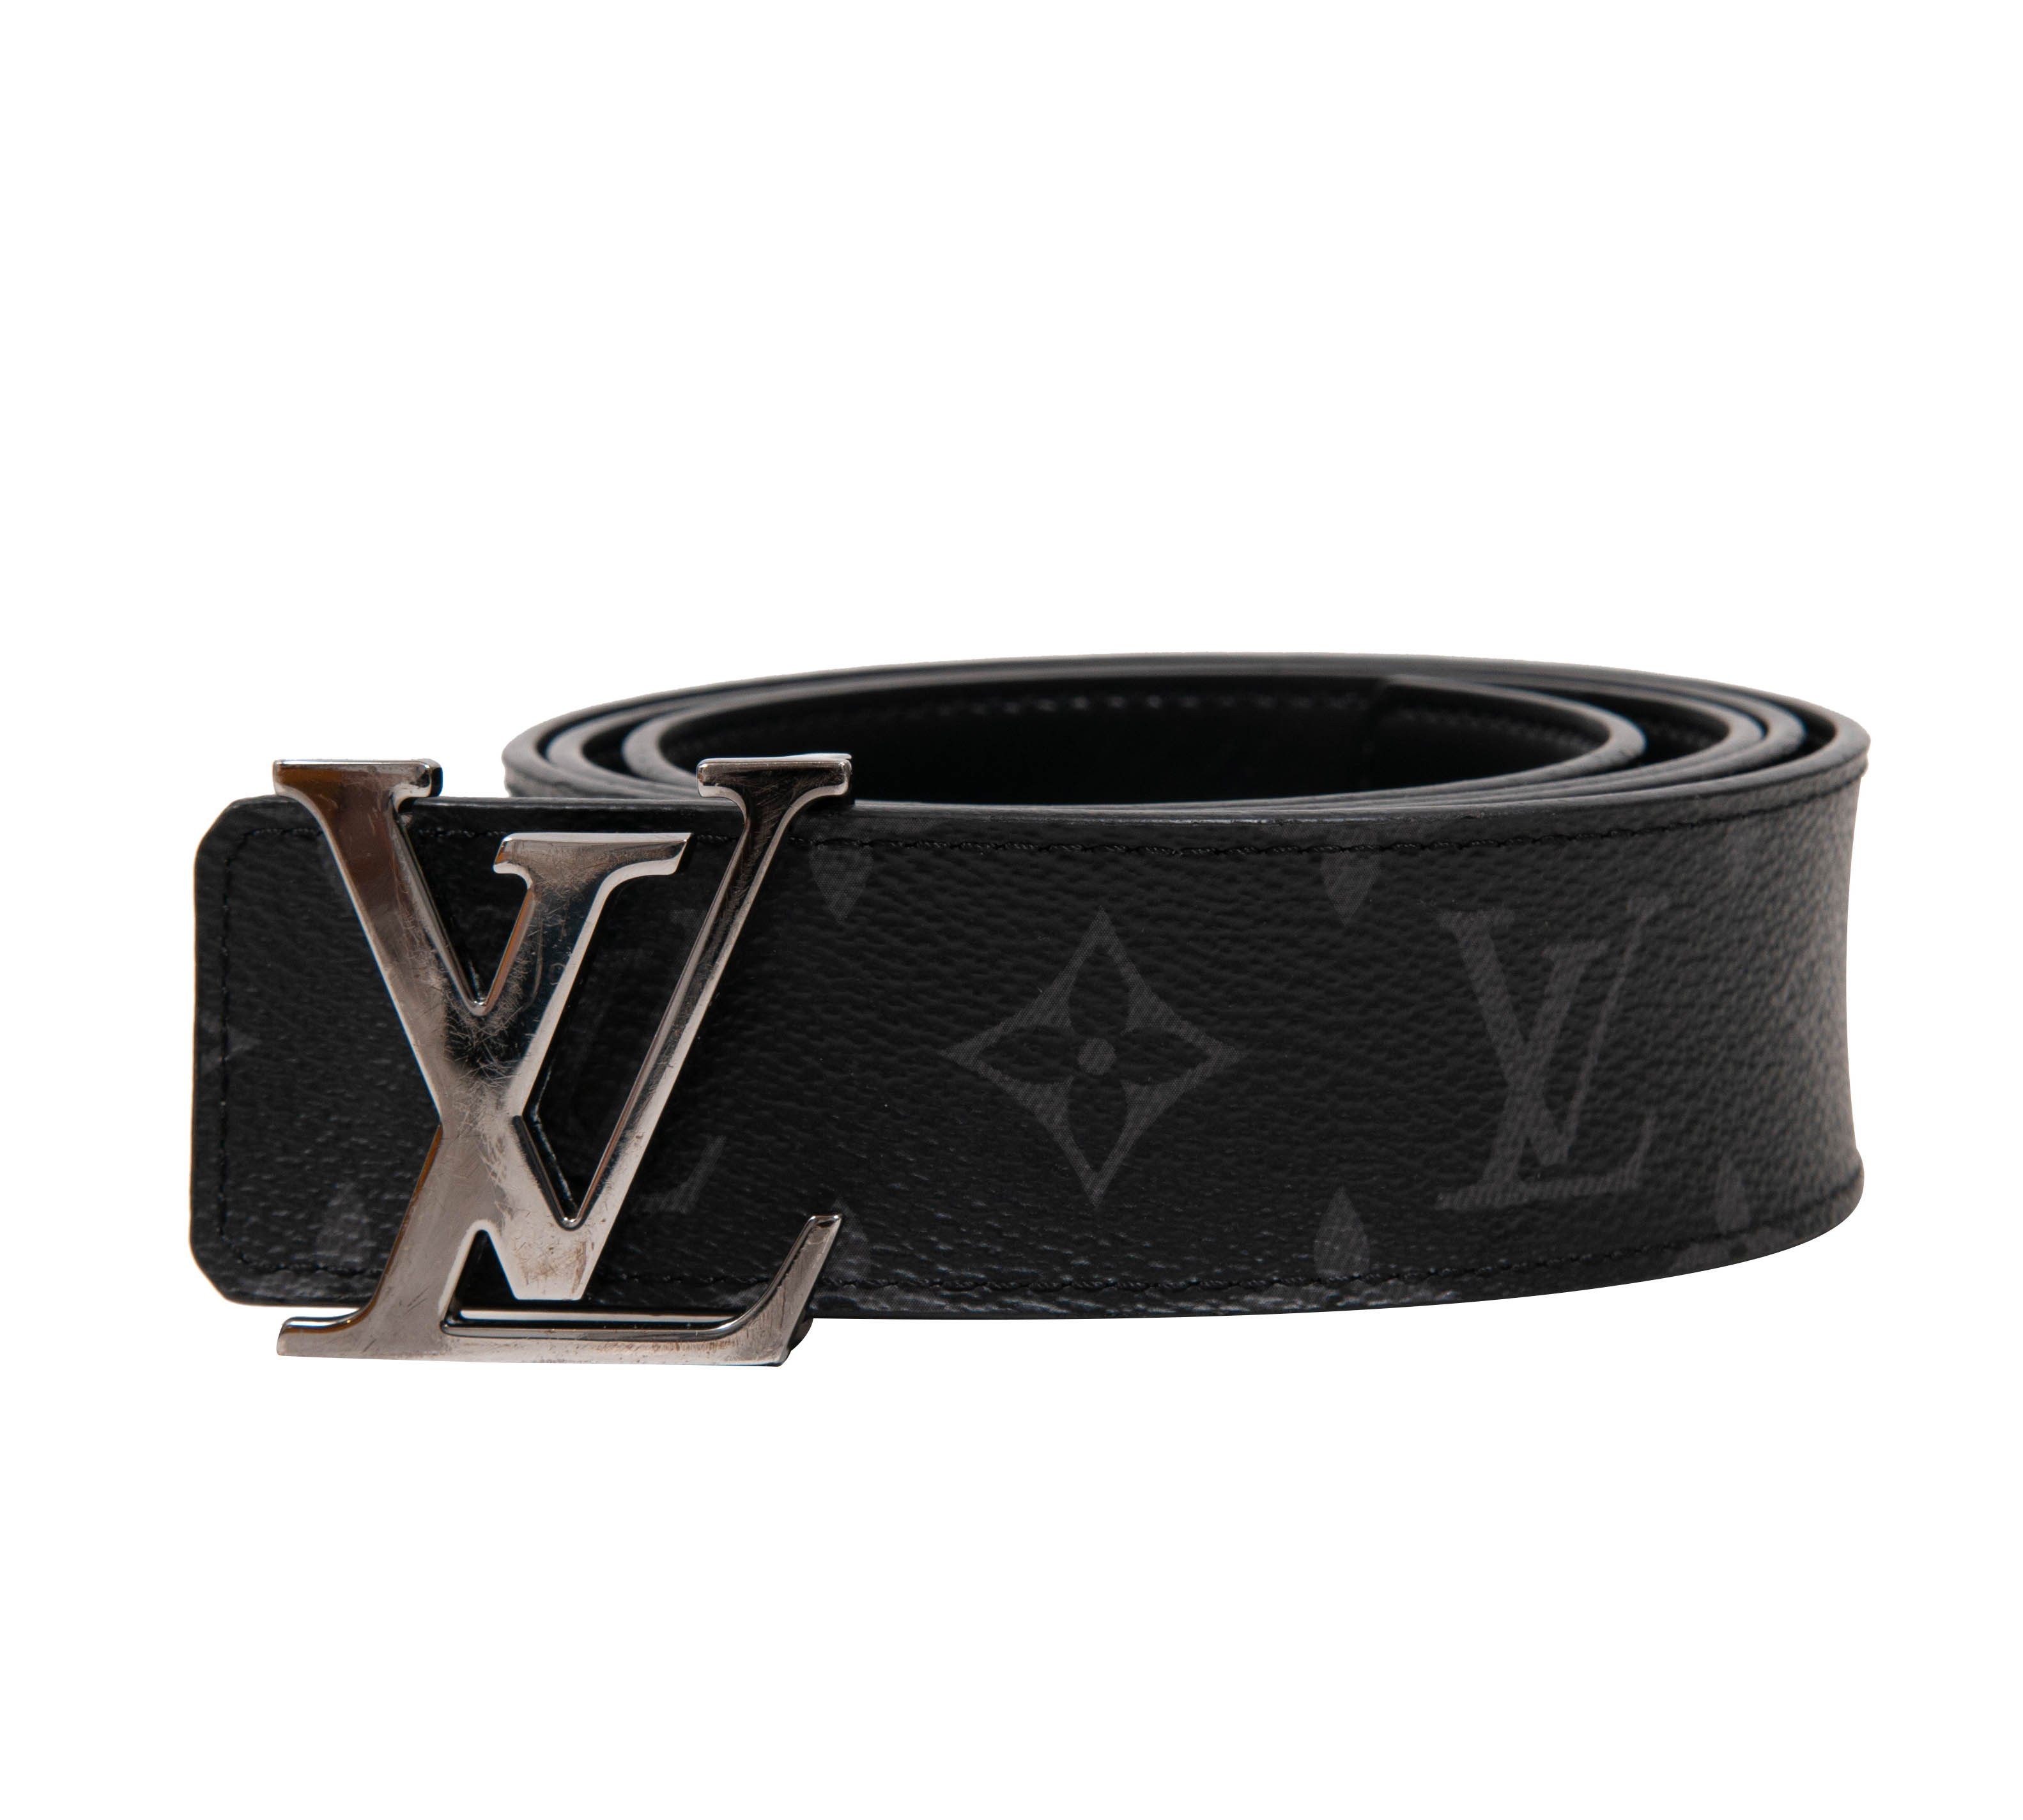 Louis Vuitton LV Initials 40 MM Black Grey Eclipse Monogram Belt